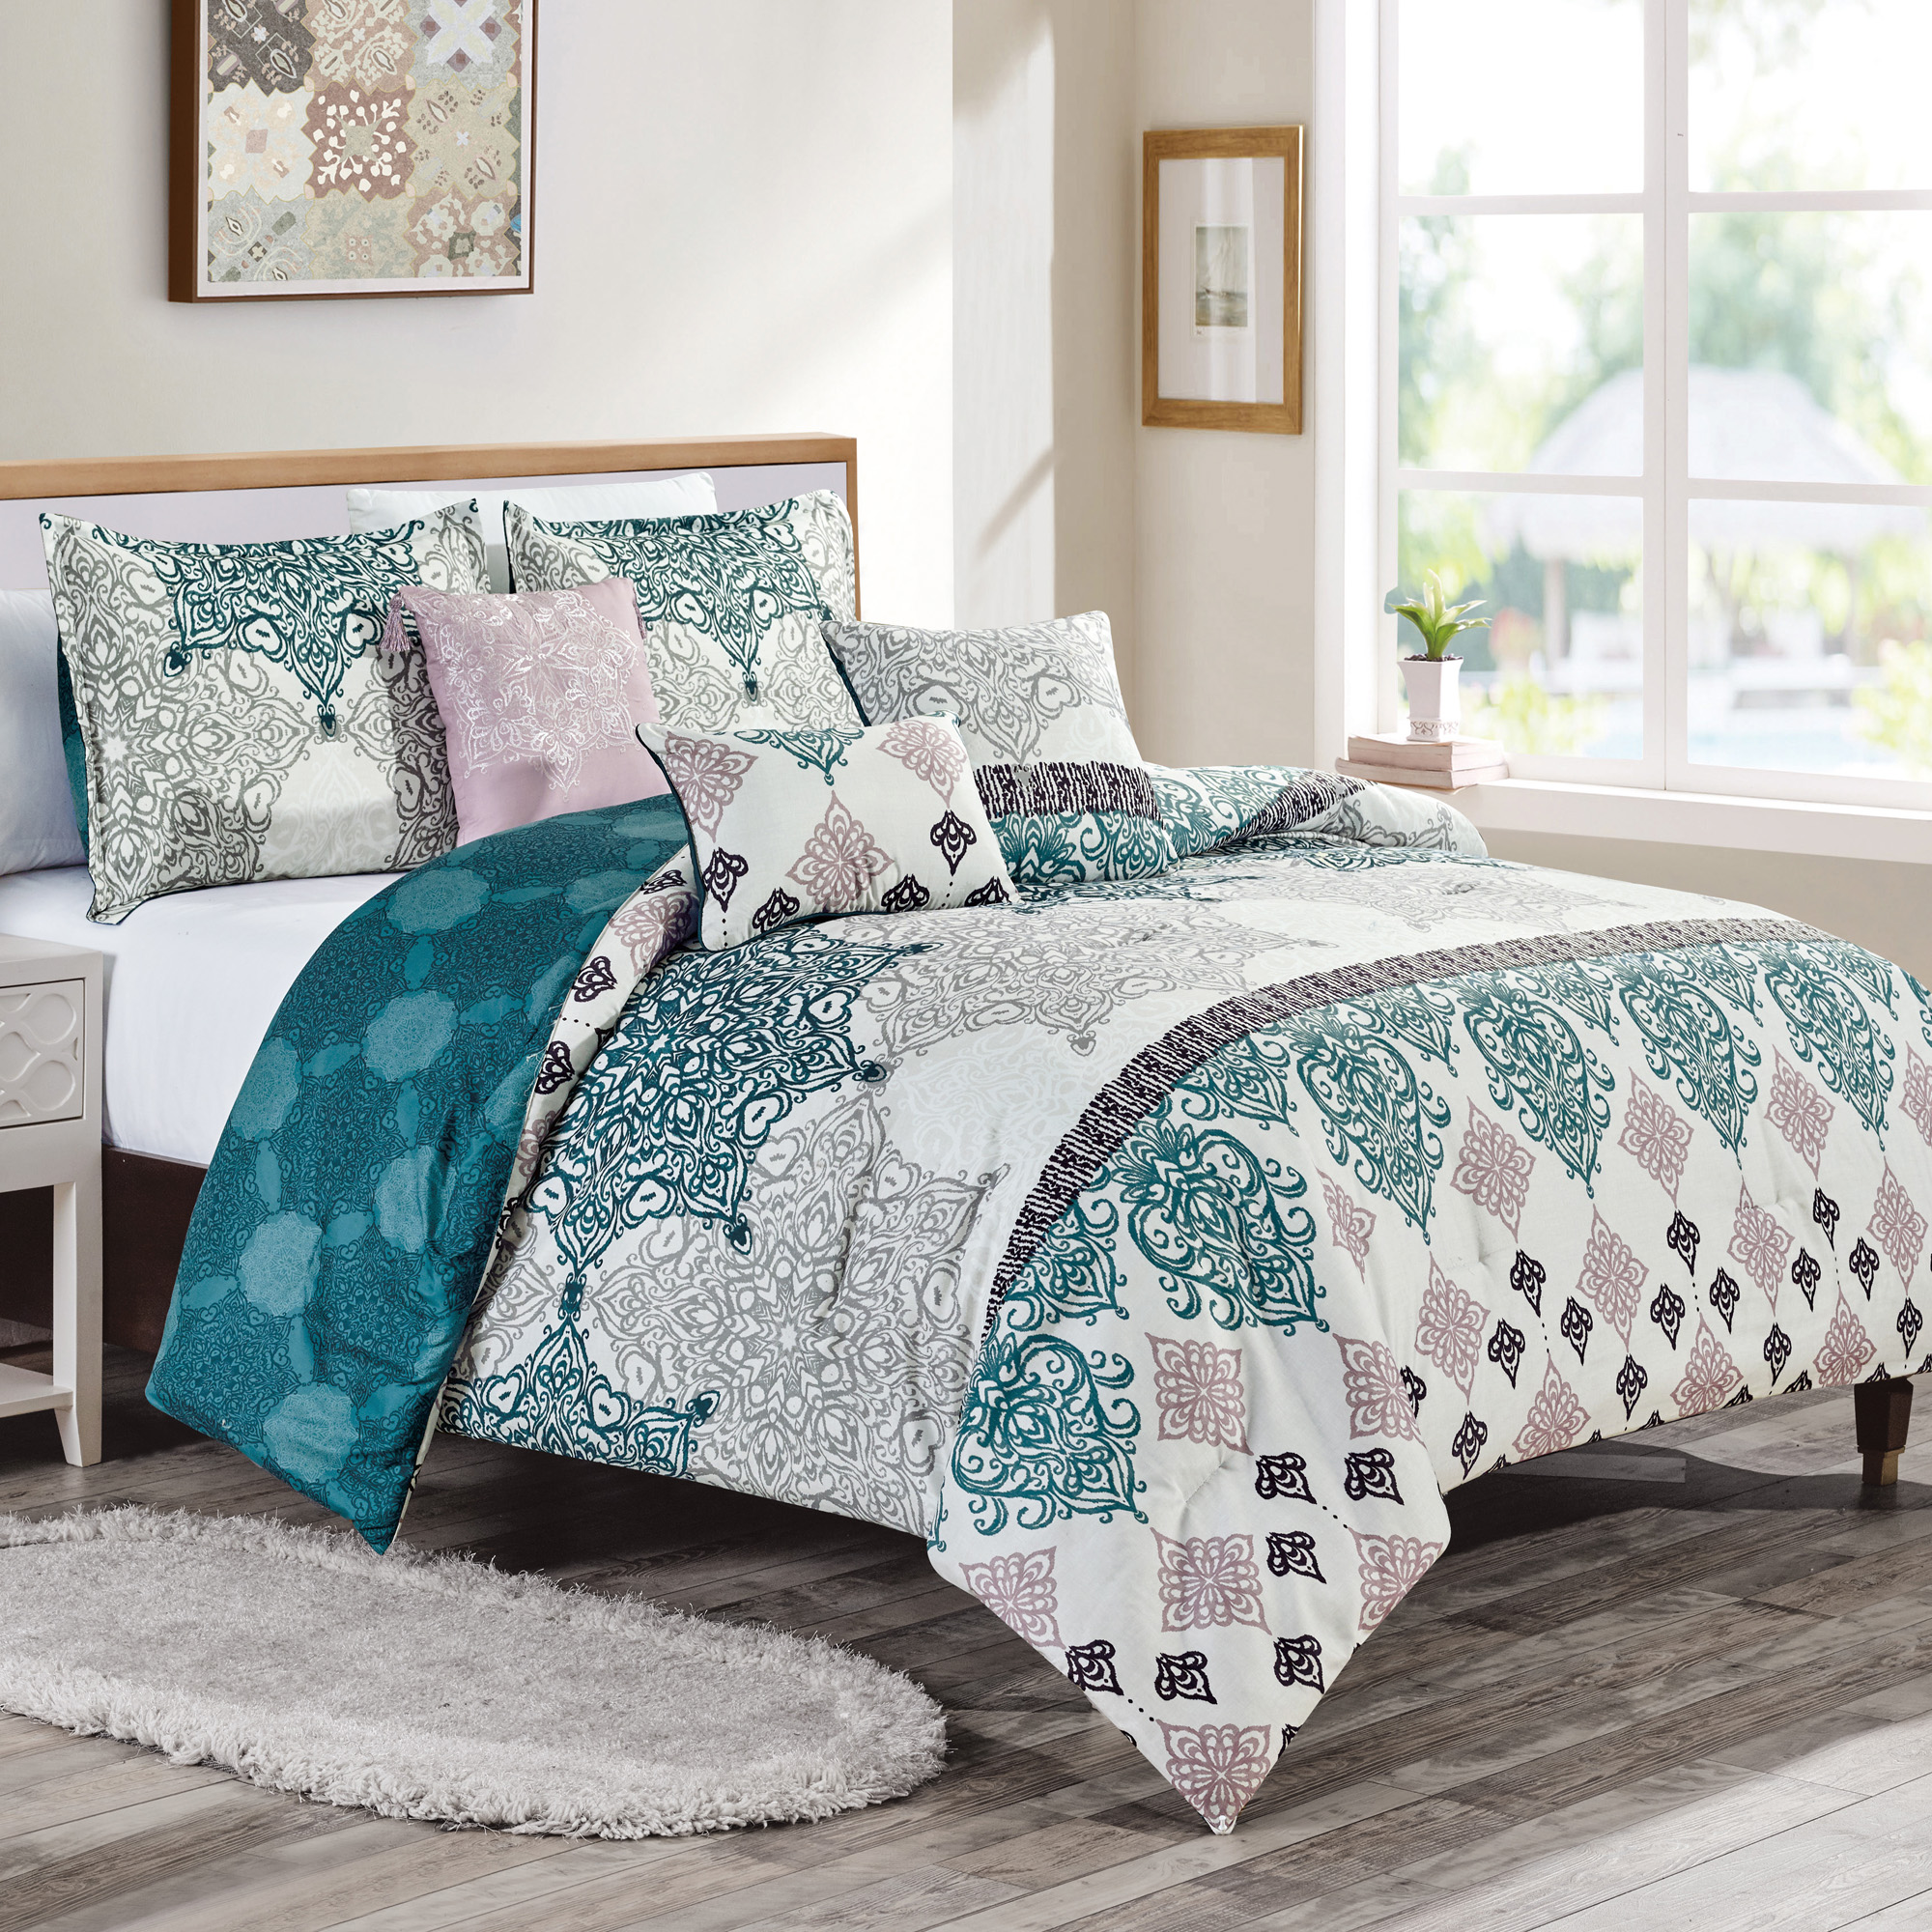 Hgmart Bedding Comforter Set Bed In A, Oversized Comforters For King Size Beds